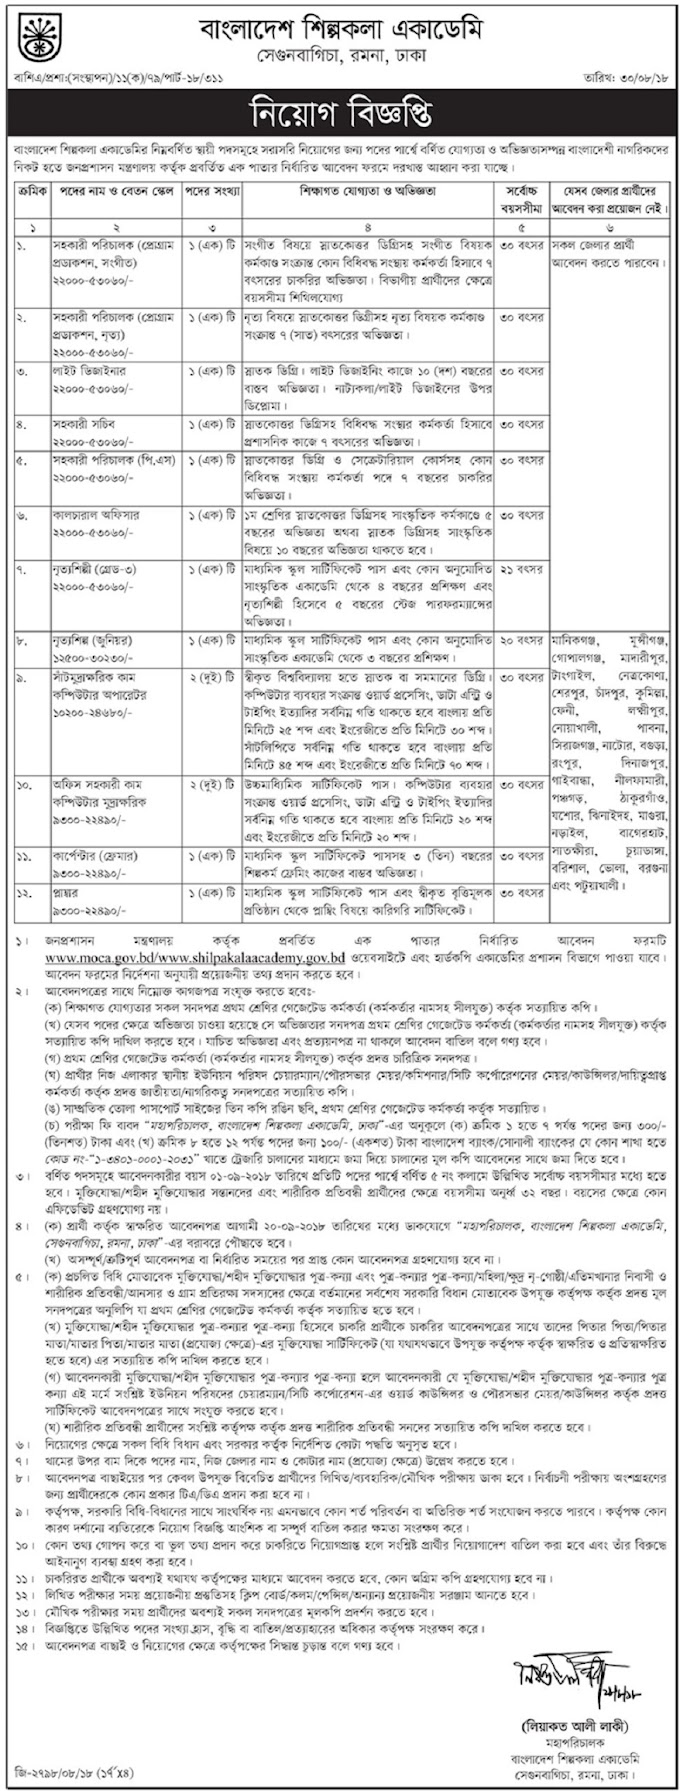 Bangladesh Shilpakala Academy job circular 2018